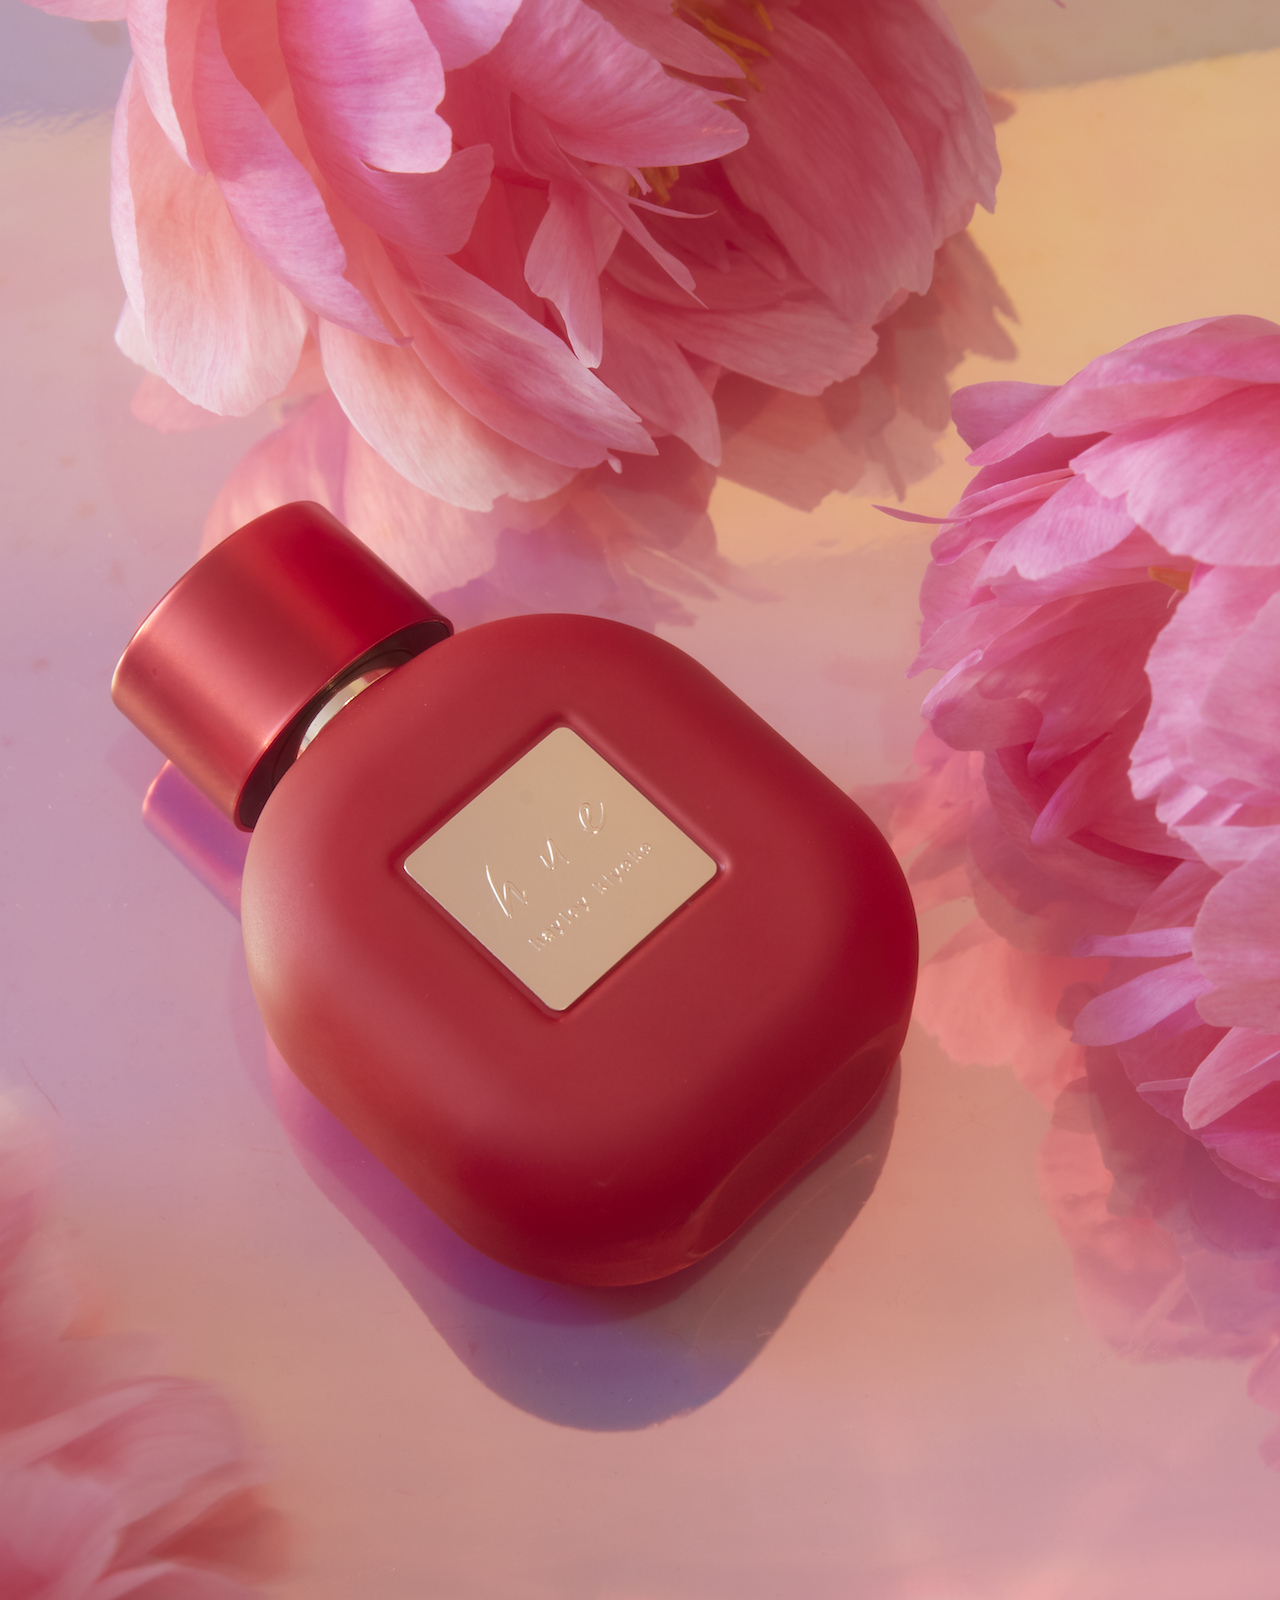 Hayley Kiyoko Is Launching Her First Fragrance, Hue